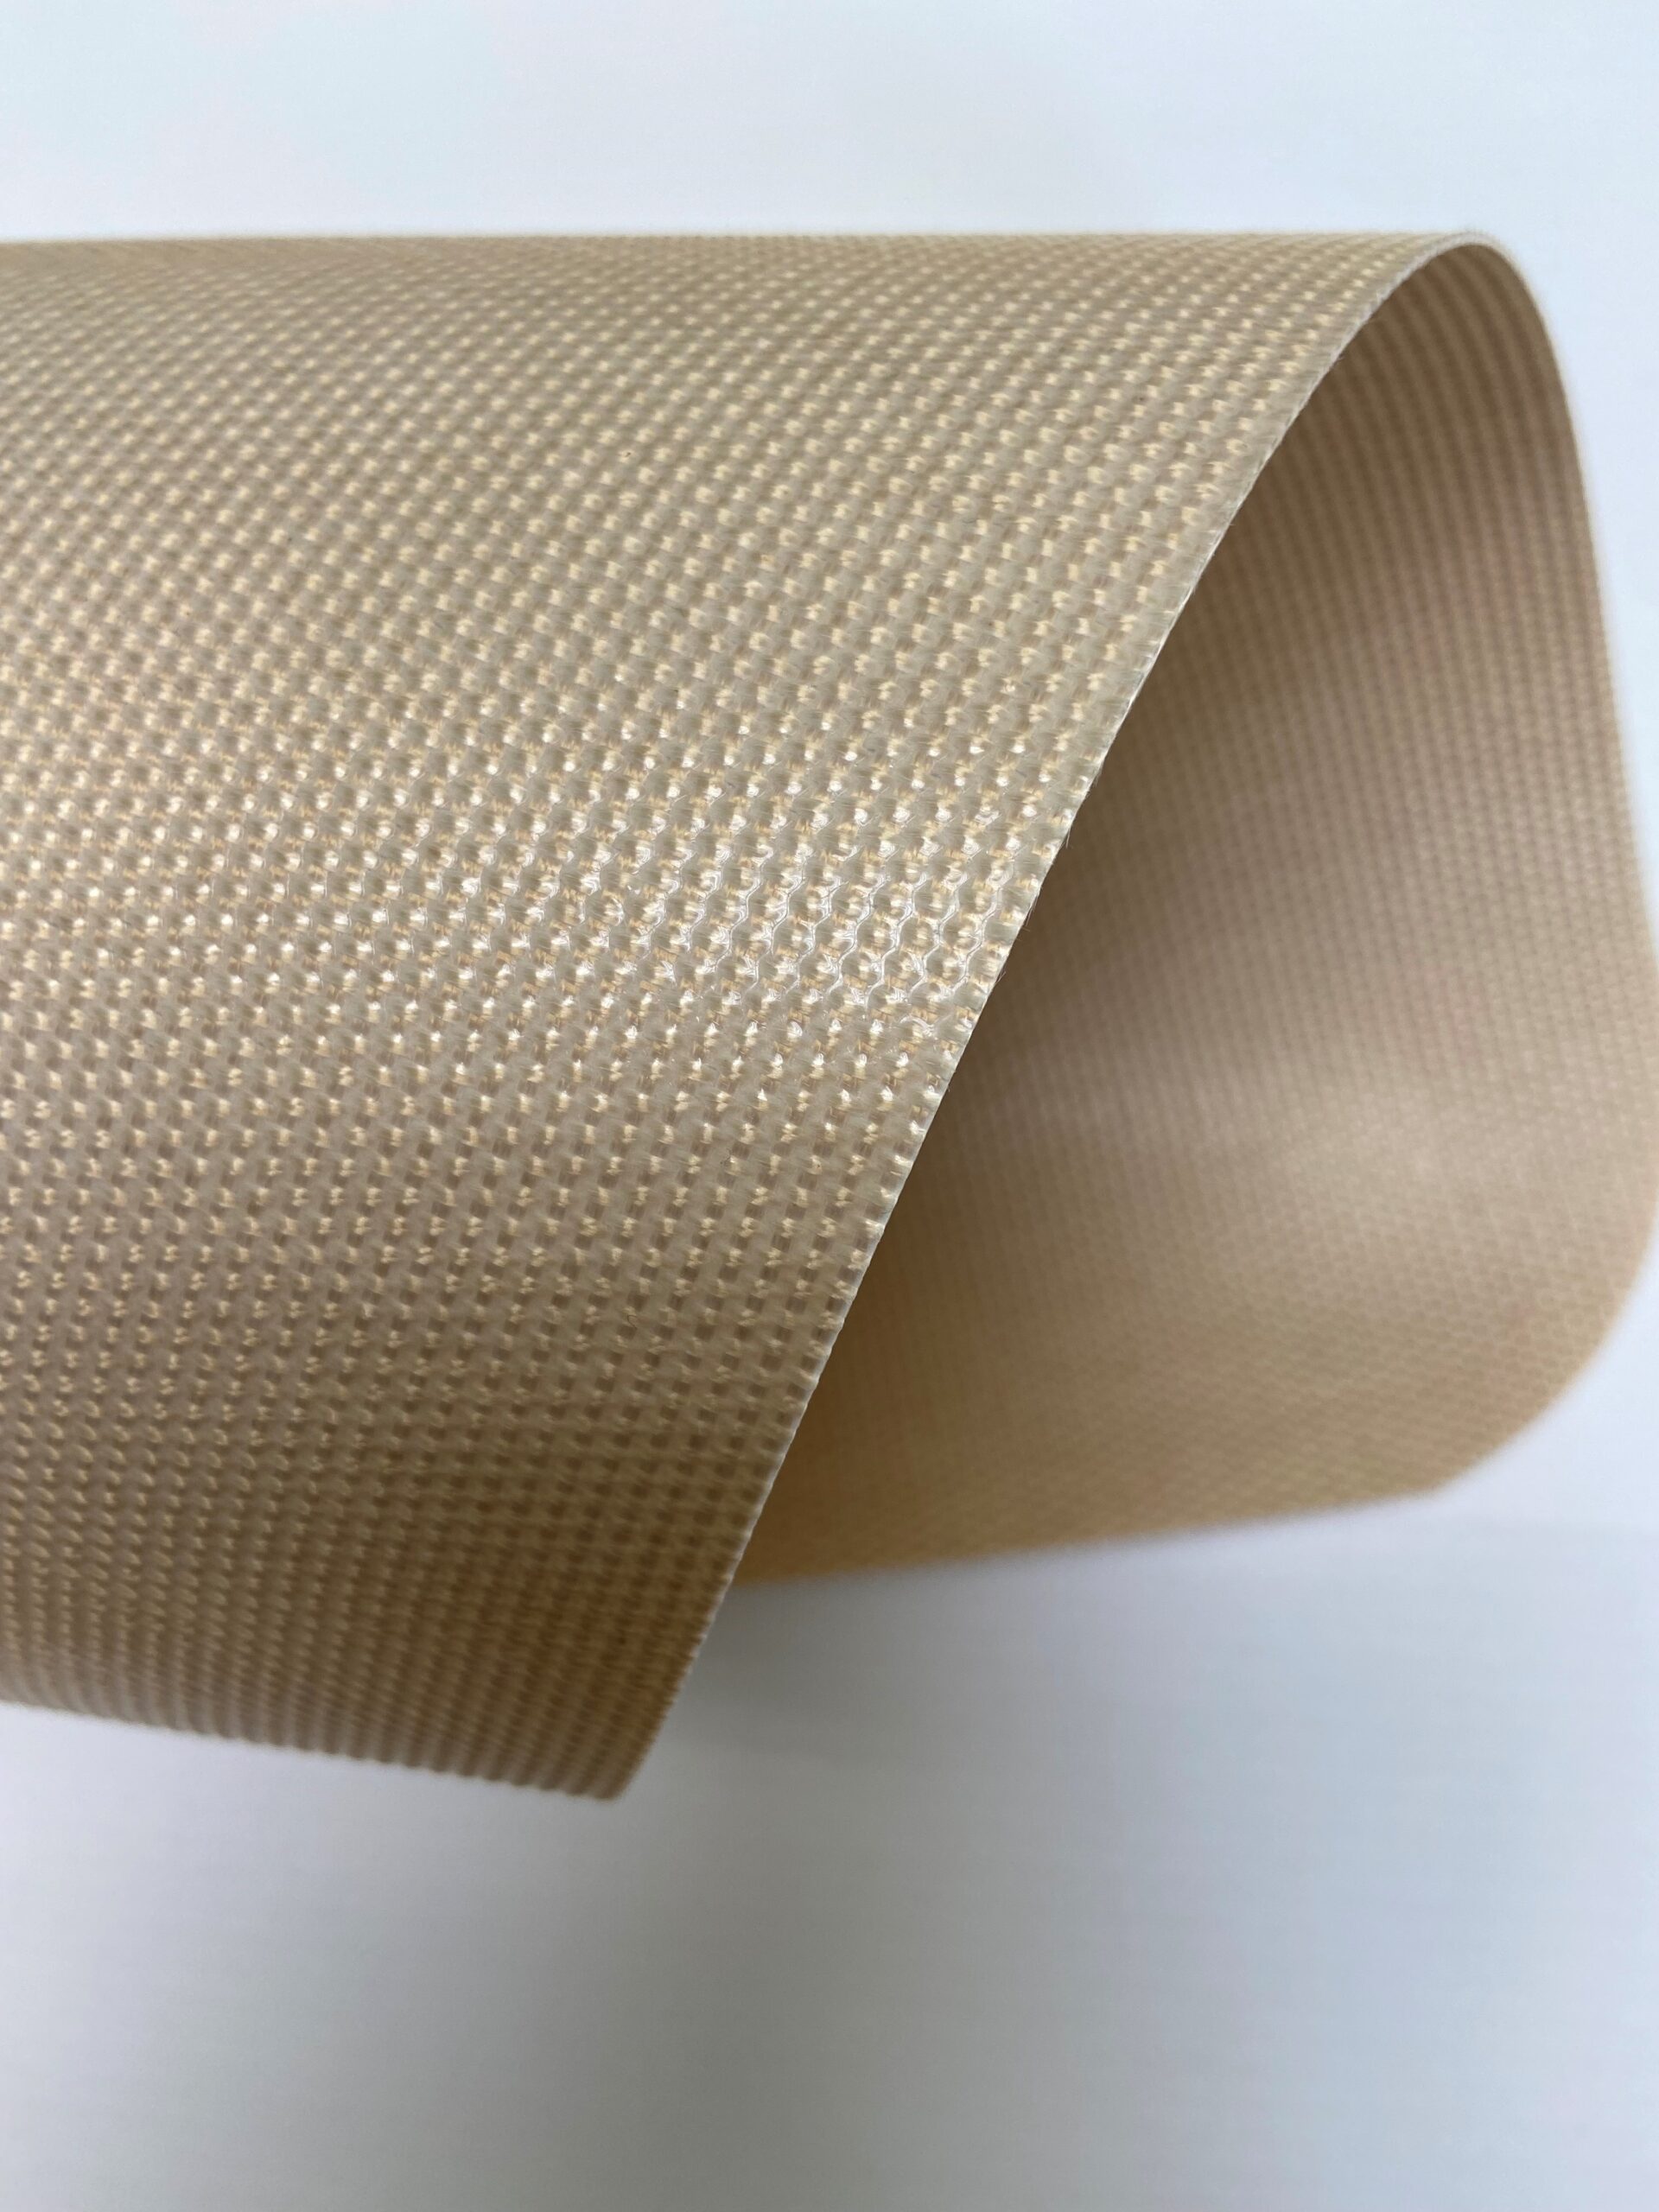 PTFE Coated Glass Fabric Sheets & Belts - Smartech